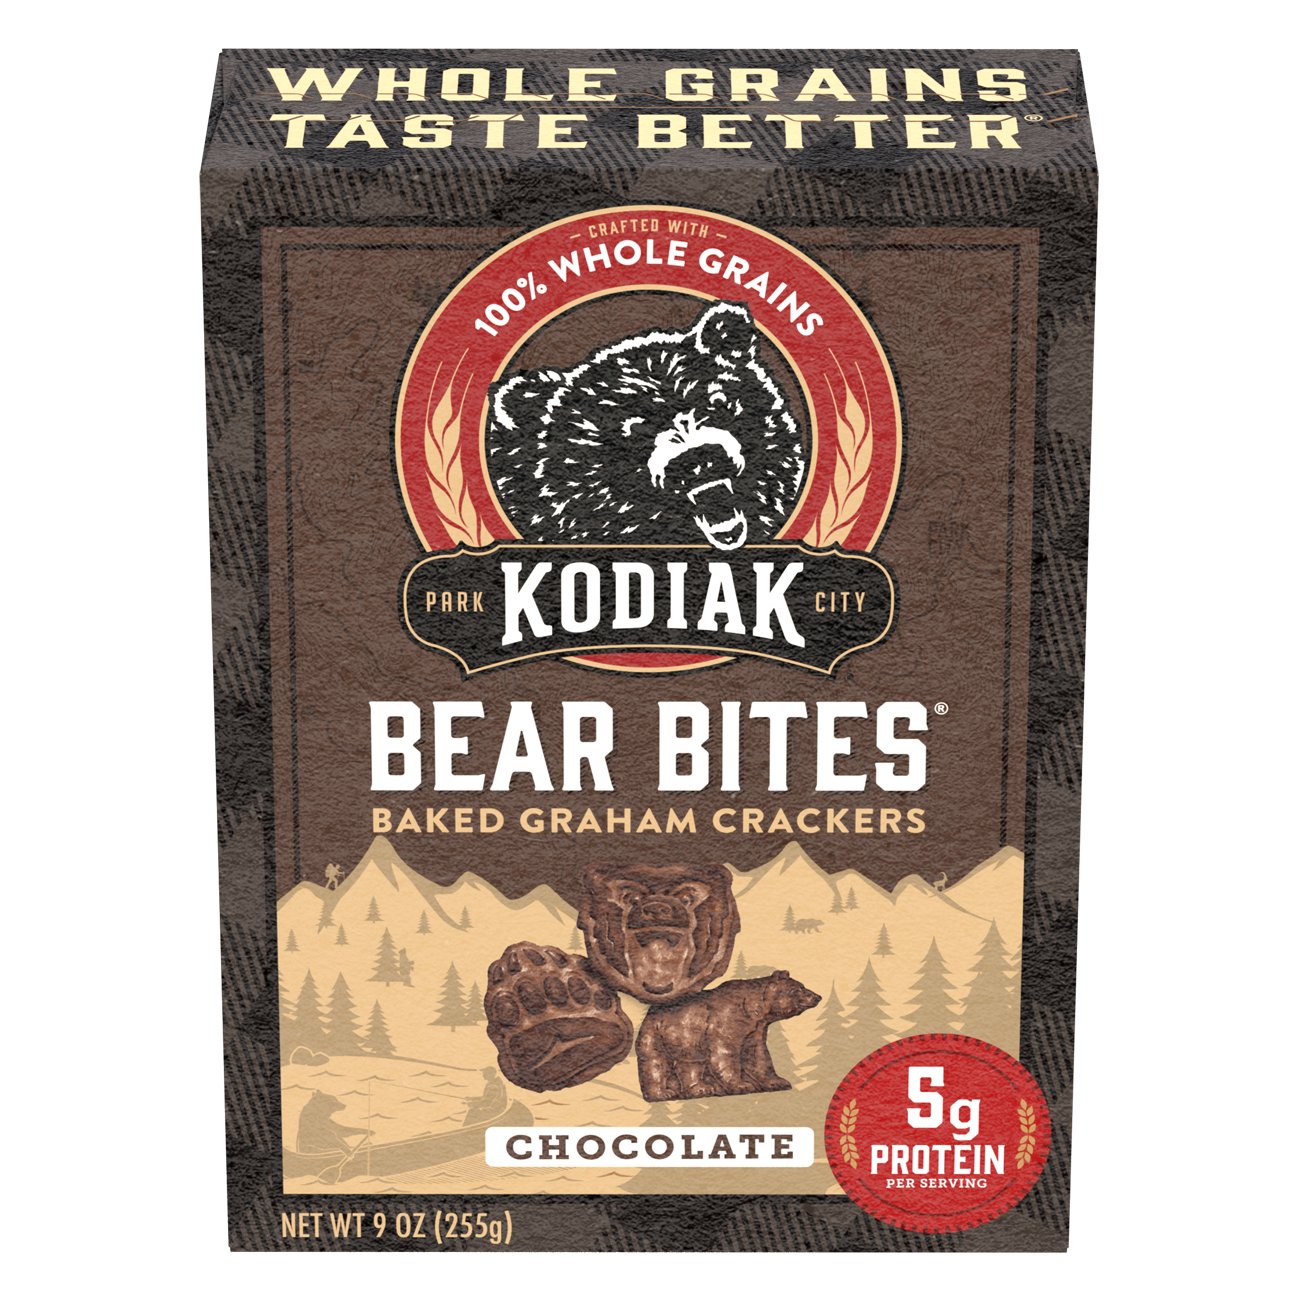 Kodiak Bear Bites 5g Protein Graham Crackers - Chocolate - Shop Cookies at  H-E-B